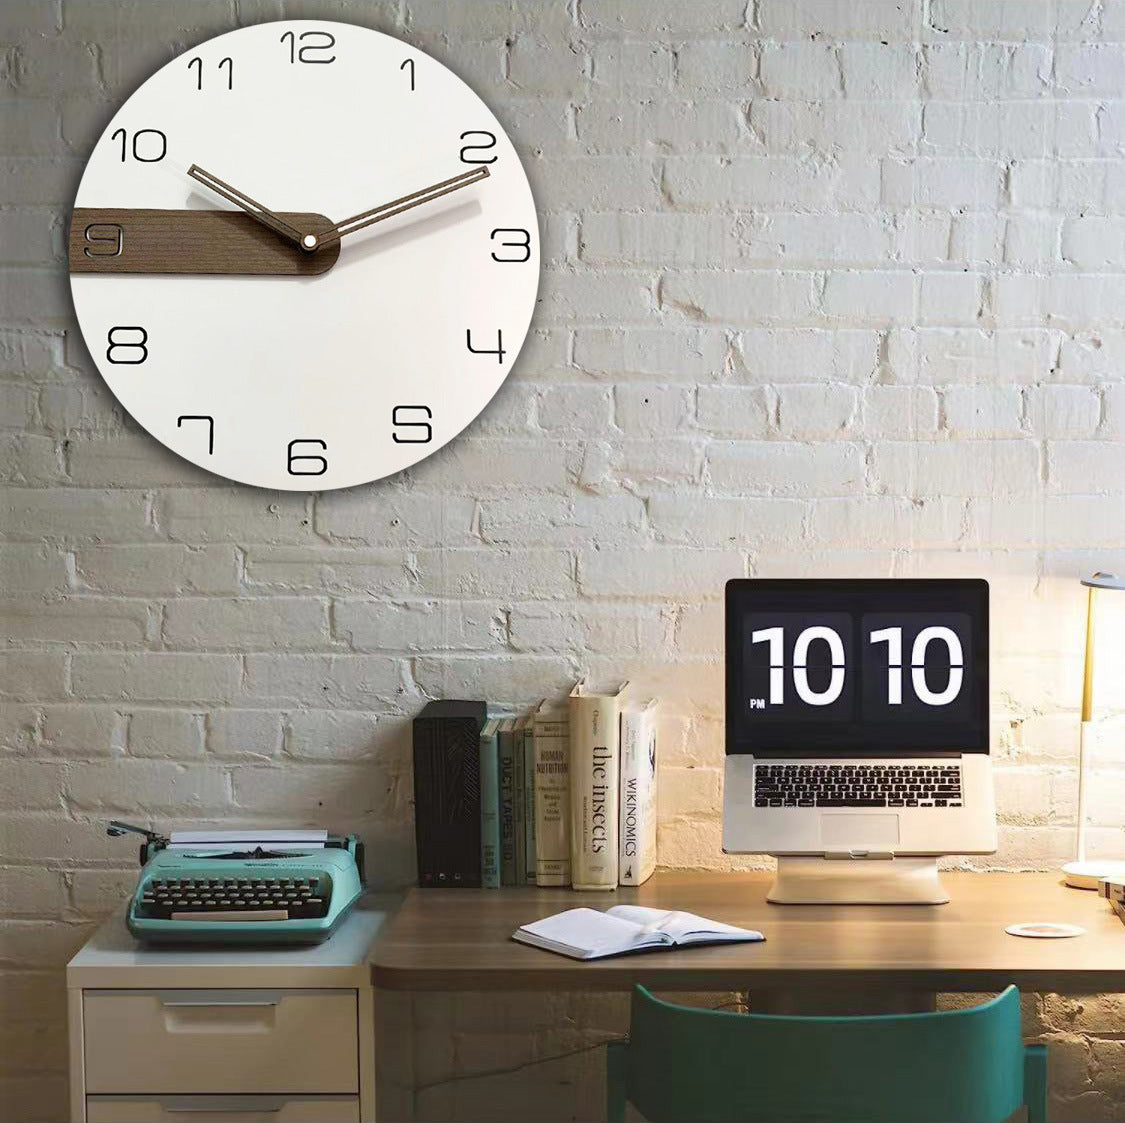 Modern Wooden Silent Wall Clock 12 Inches